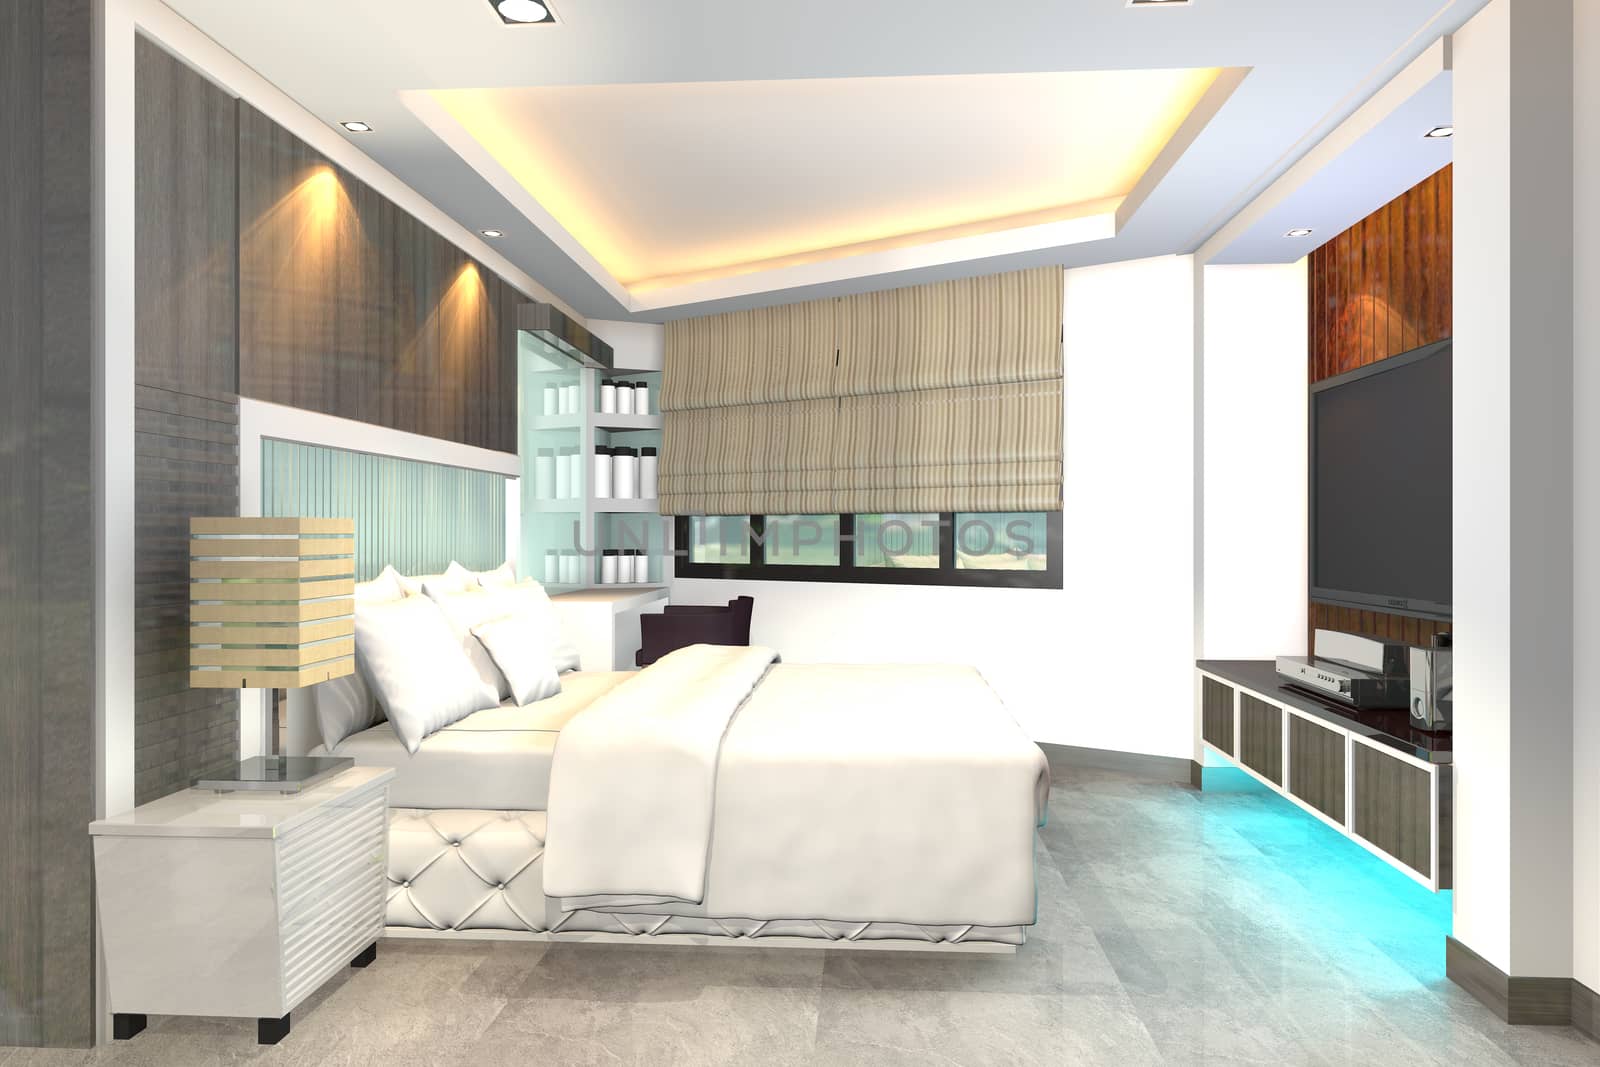 Interior Design 3D Perspective: Master Bedroom